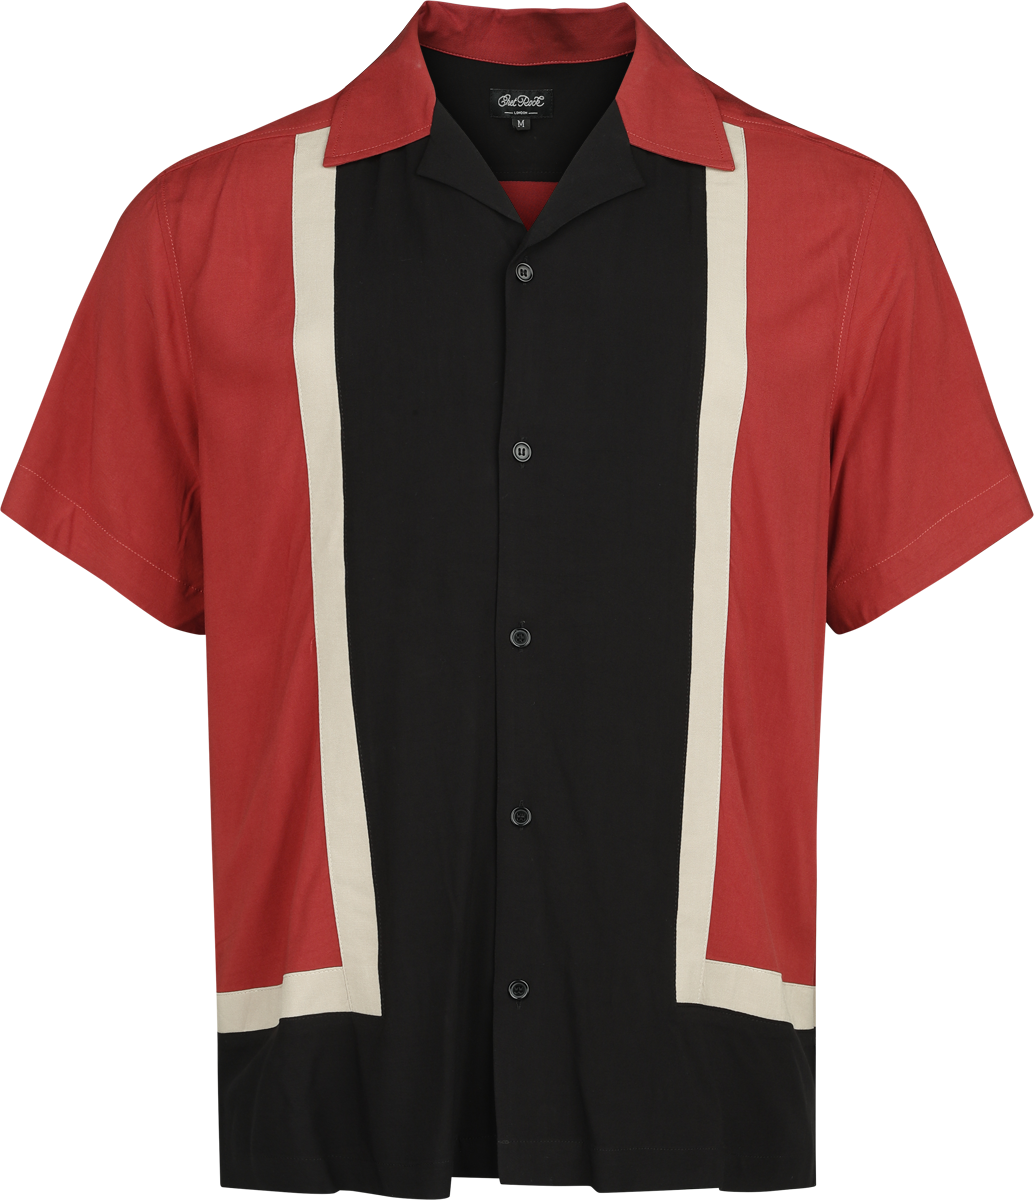 Chet Rock - Walter Bowling Shirt - Kurzarmhemd - rot| schwarz